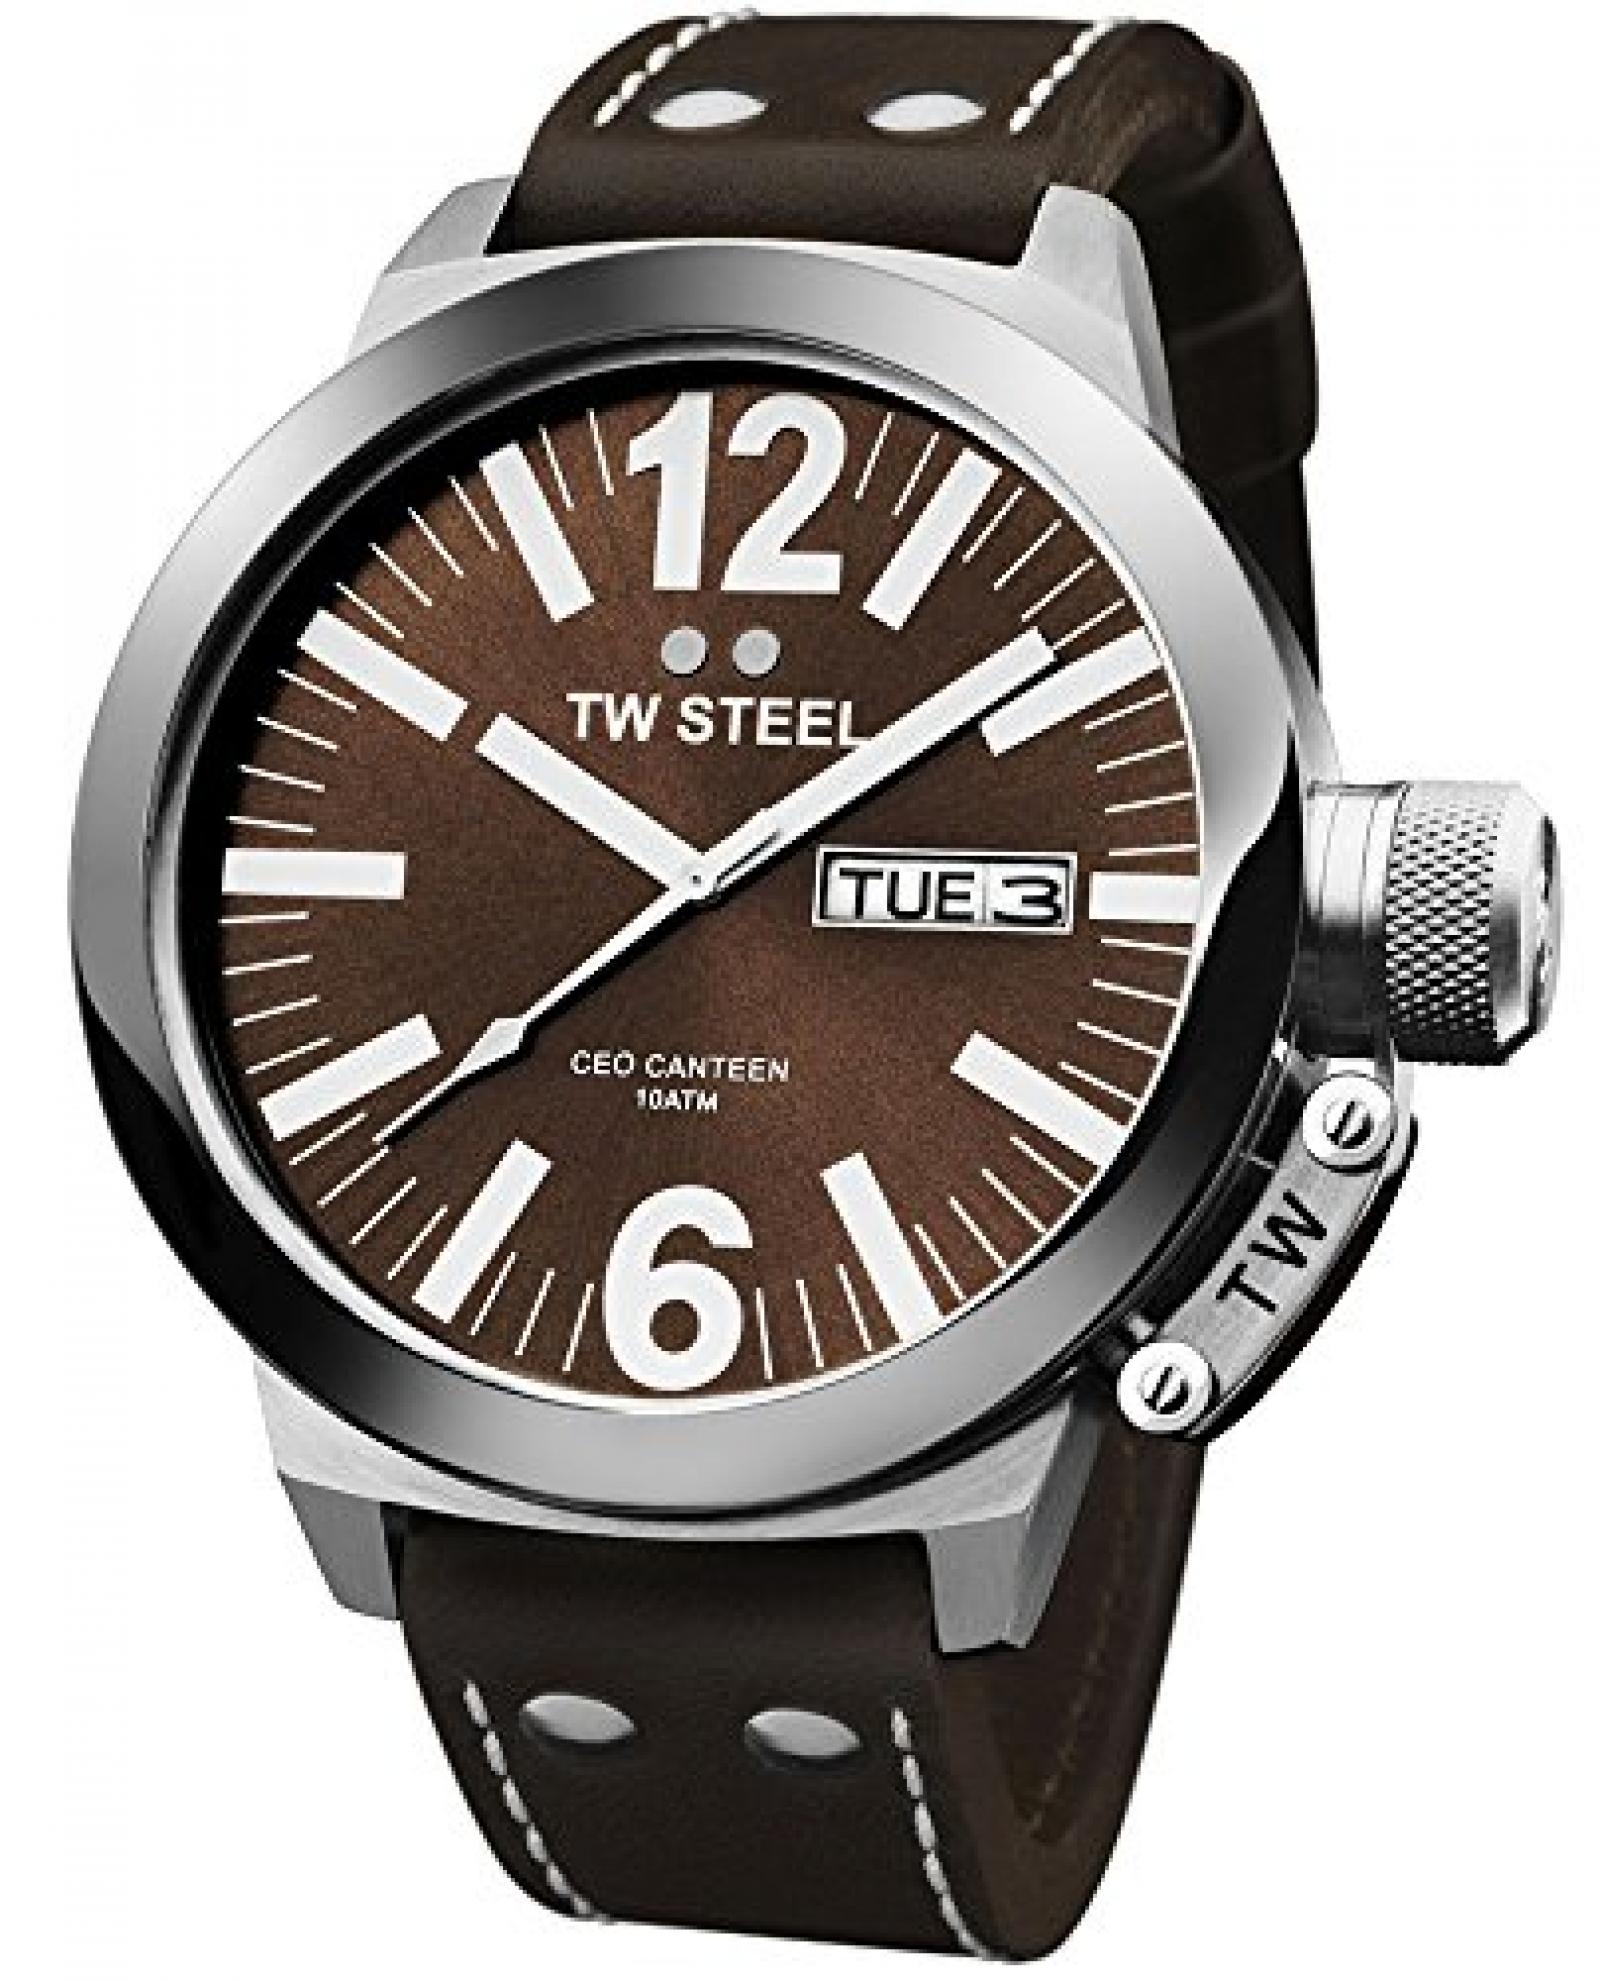 TW-Steel Armbanduhr CEO Canteen TWCE1009 